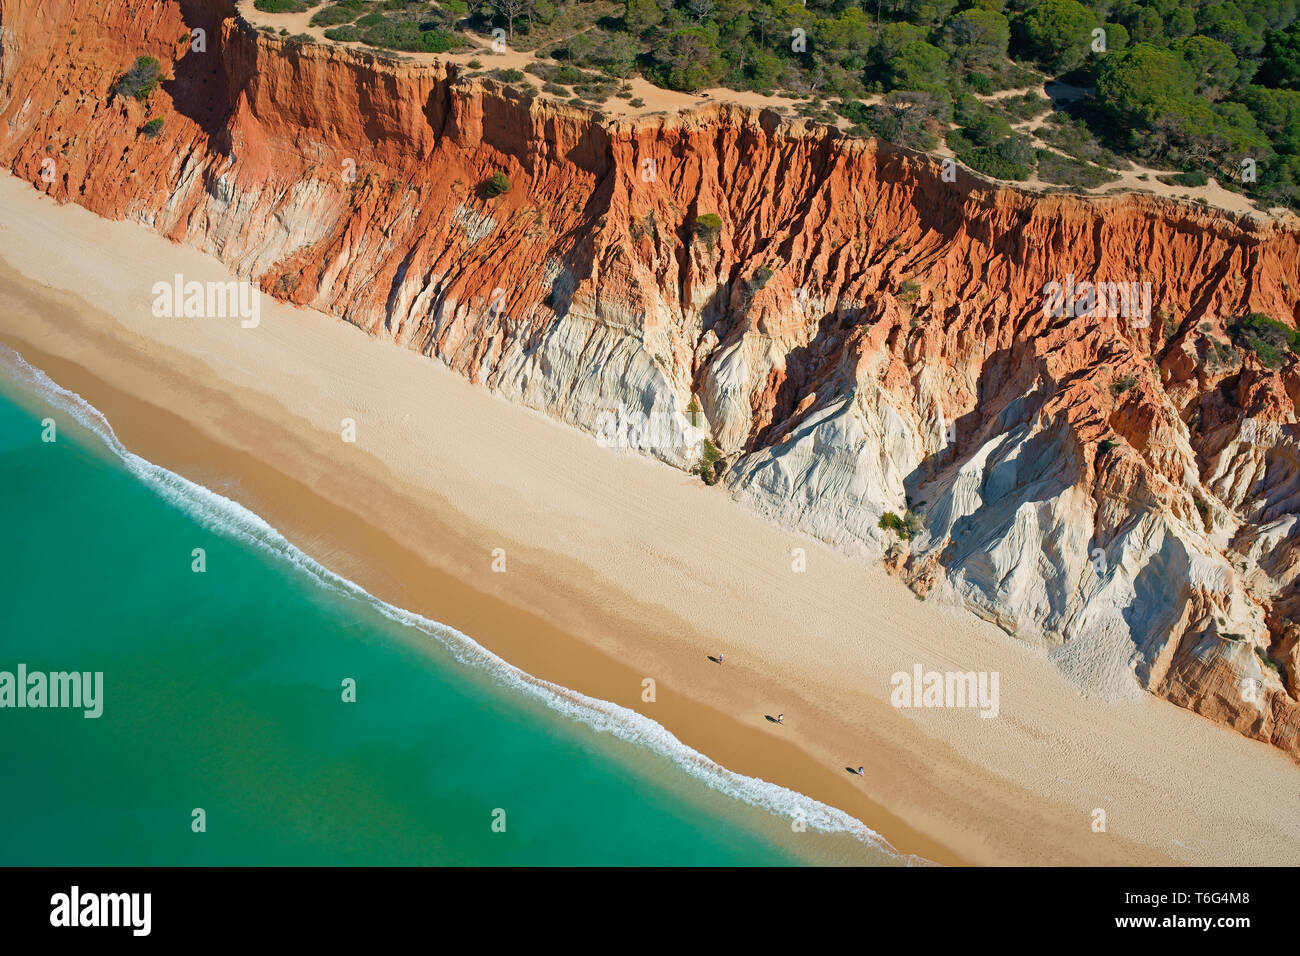 AERIAL VIEW. Praia da Falésia (beach of the cliff); an eroded seaside cliff with multicolored strata. Albufeira, Algarve, Portugal. Stock Photo